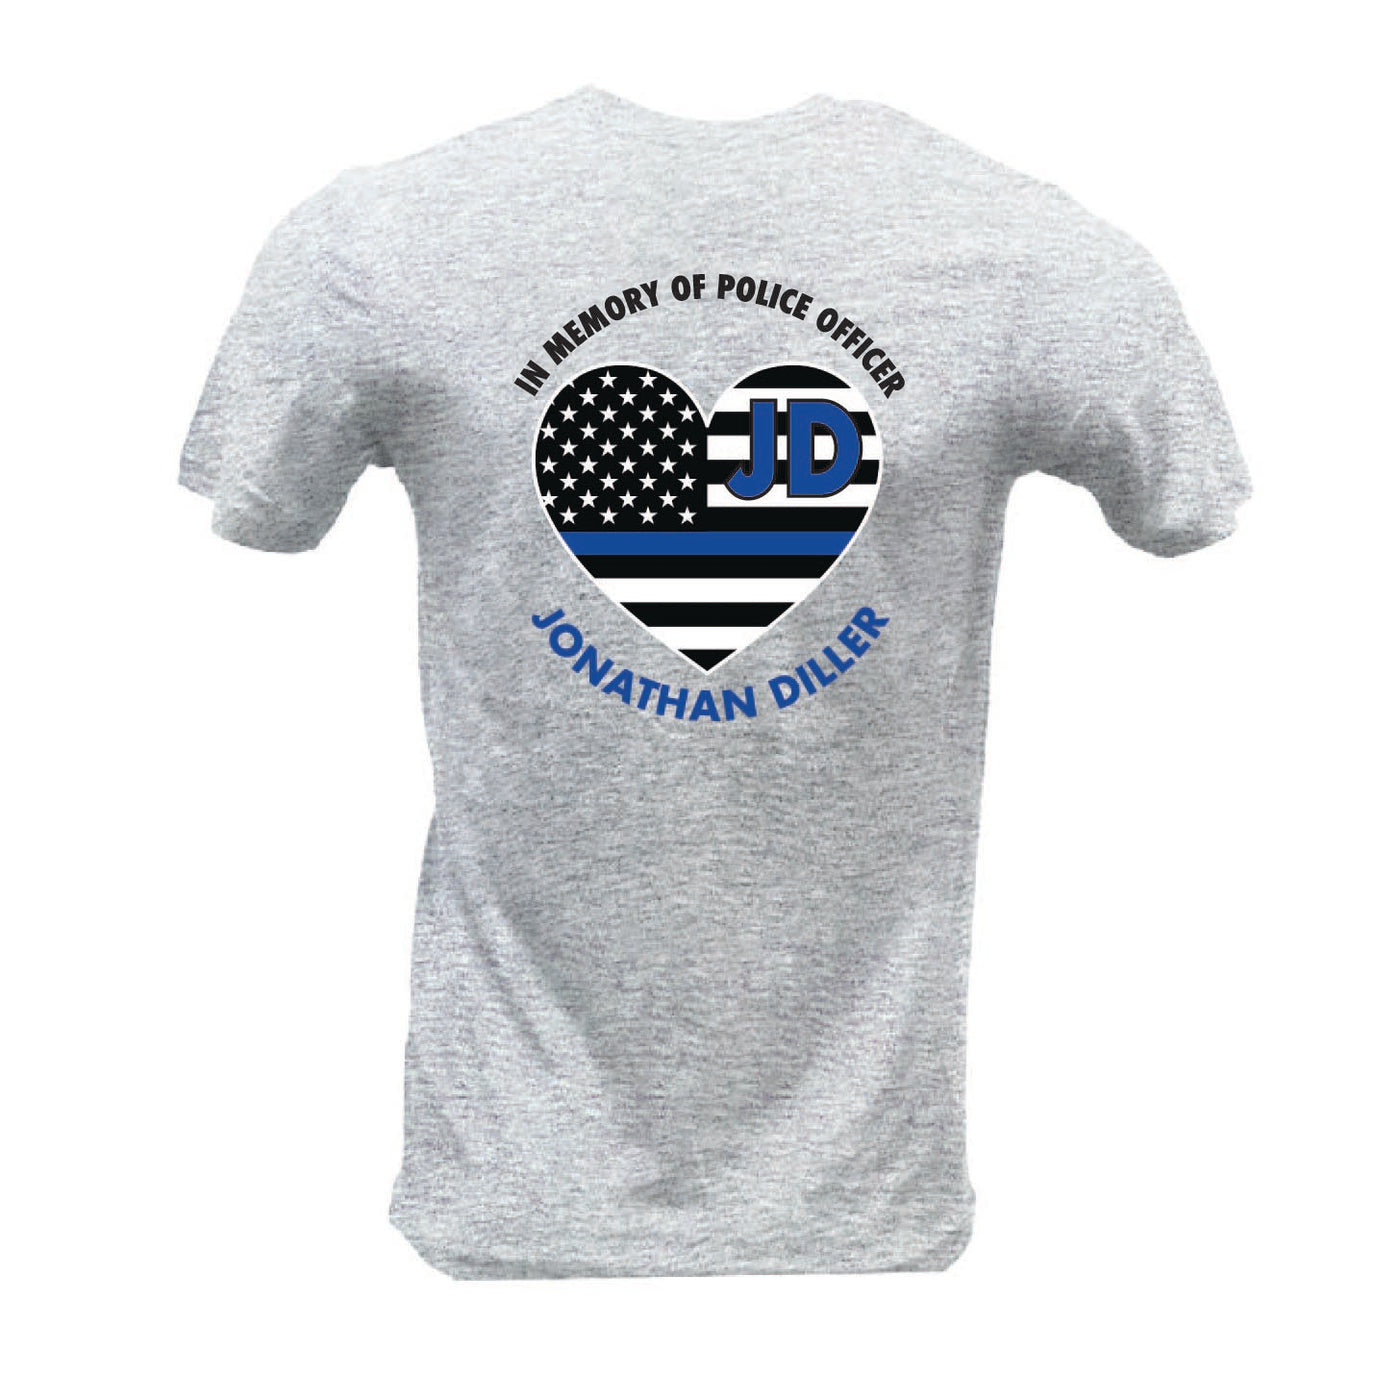 NYPD Jonathan Diller T Shirt